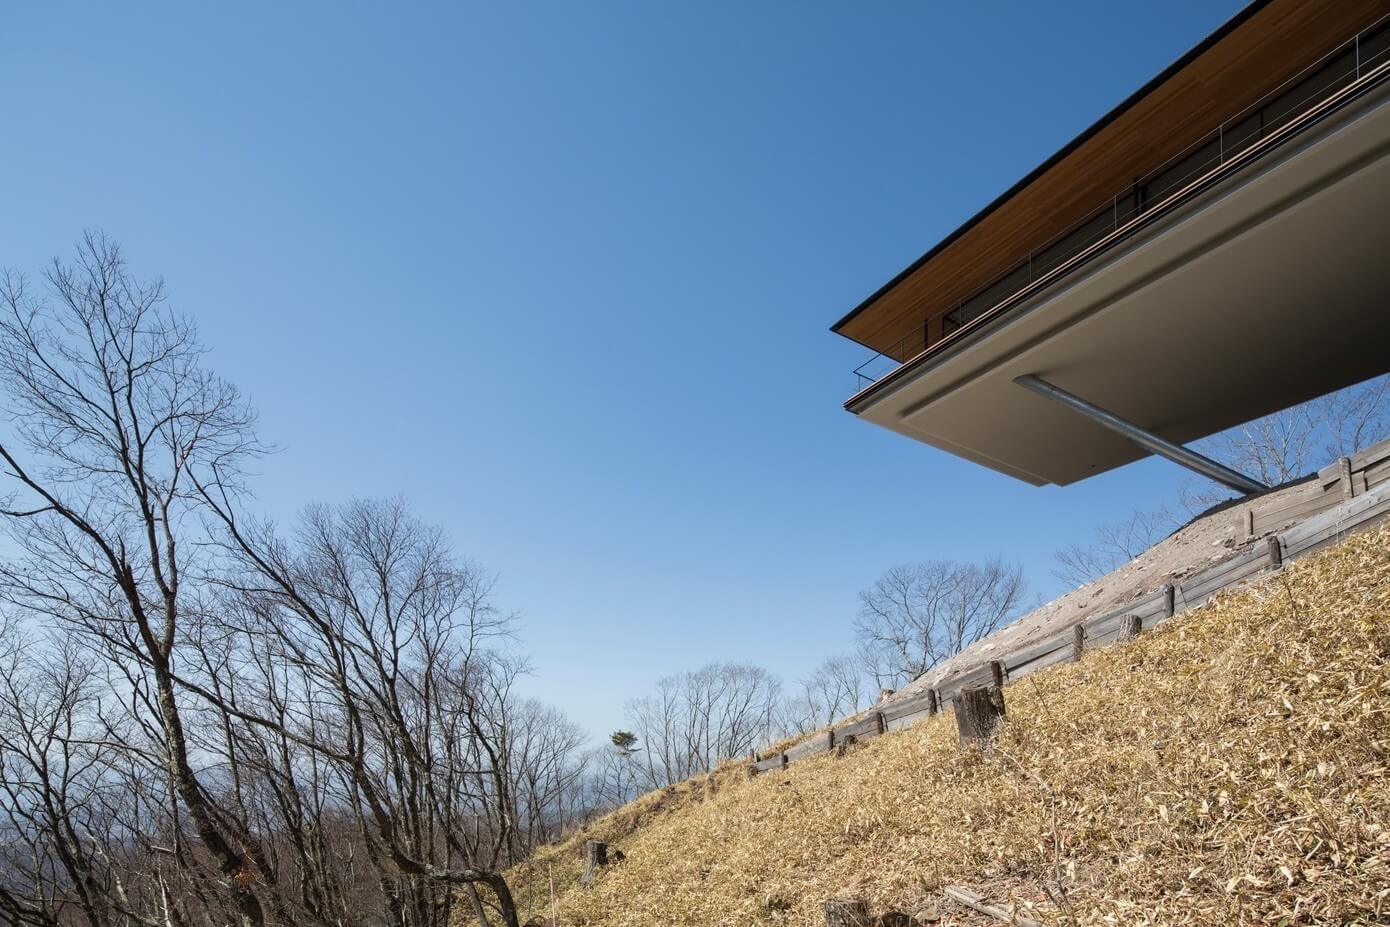 House in Yatsugatake by Kidosaki Architects Studio